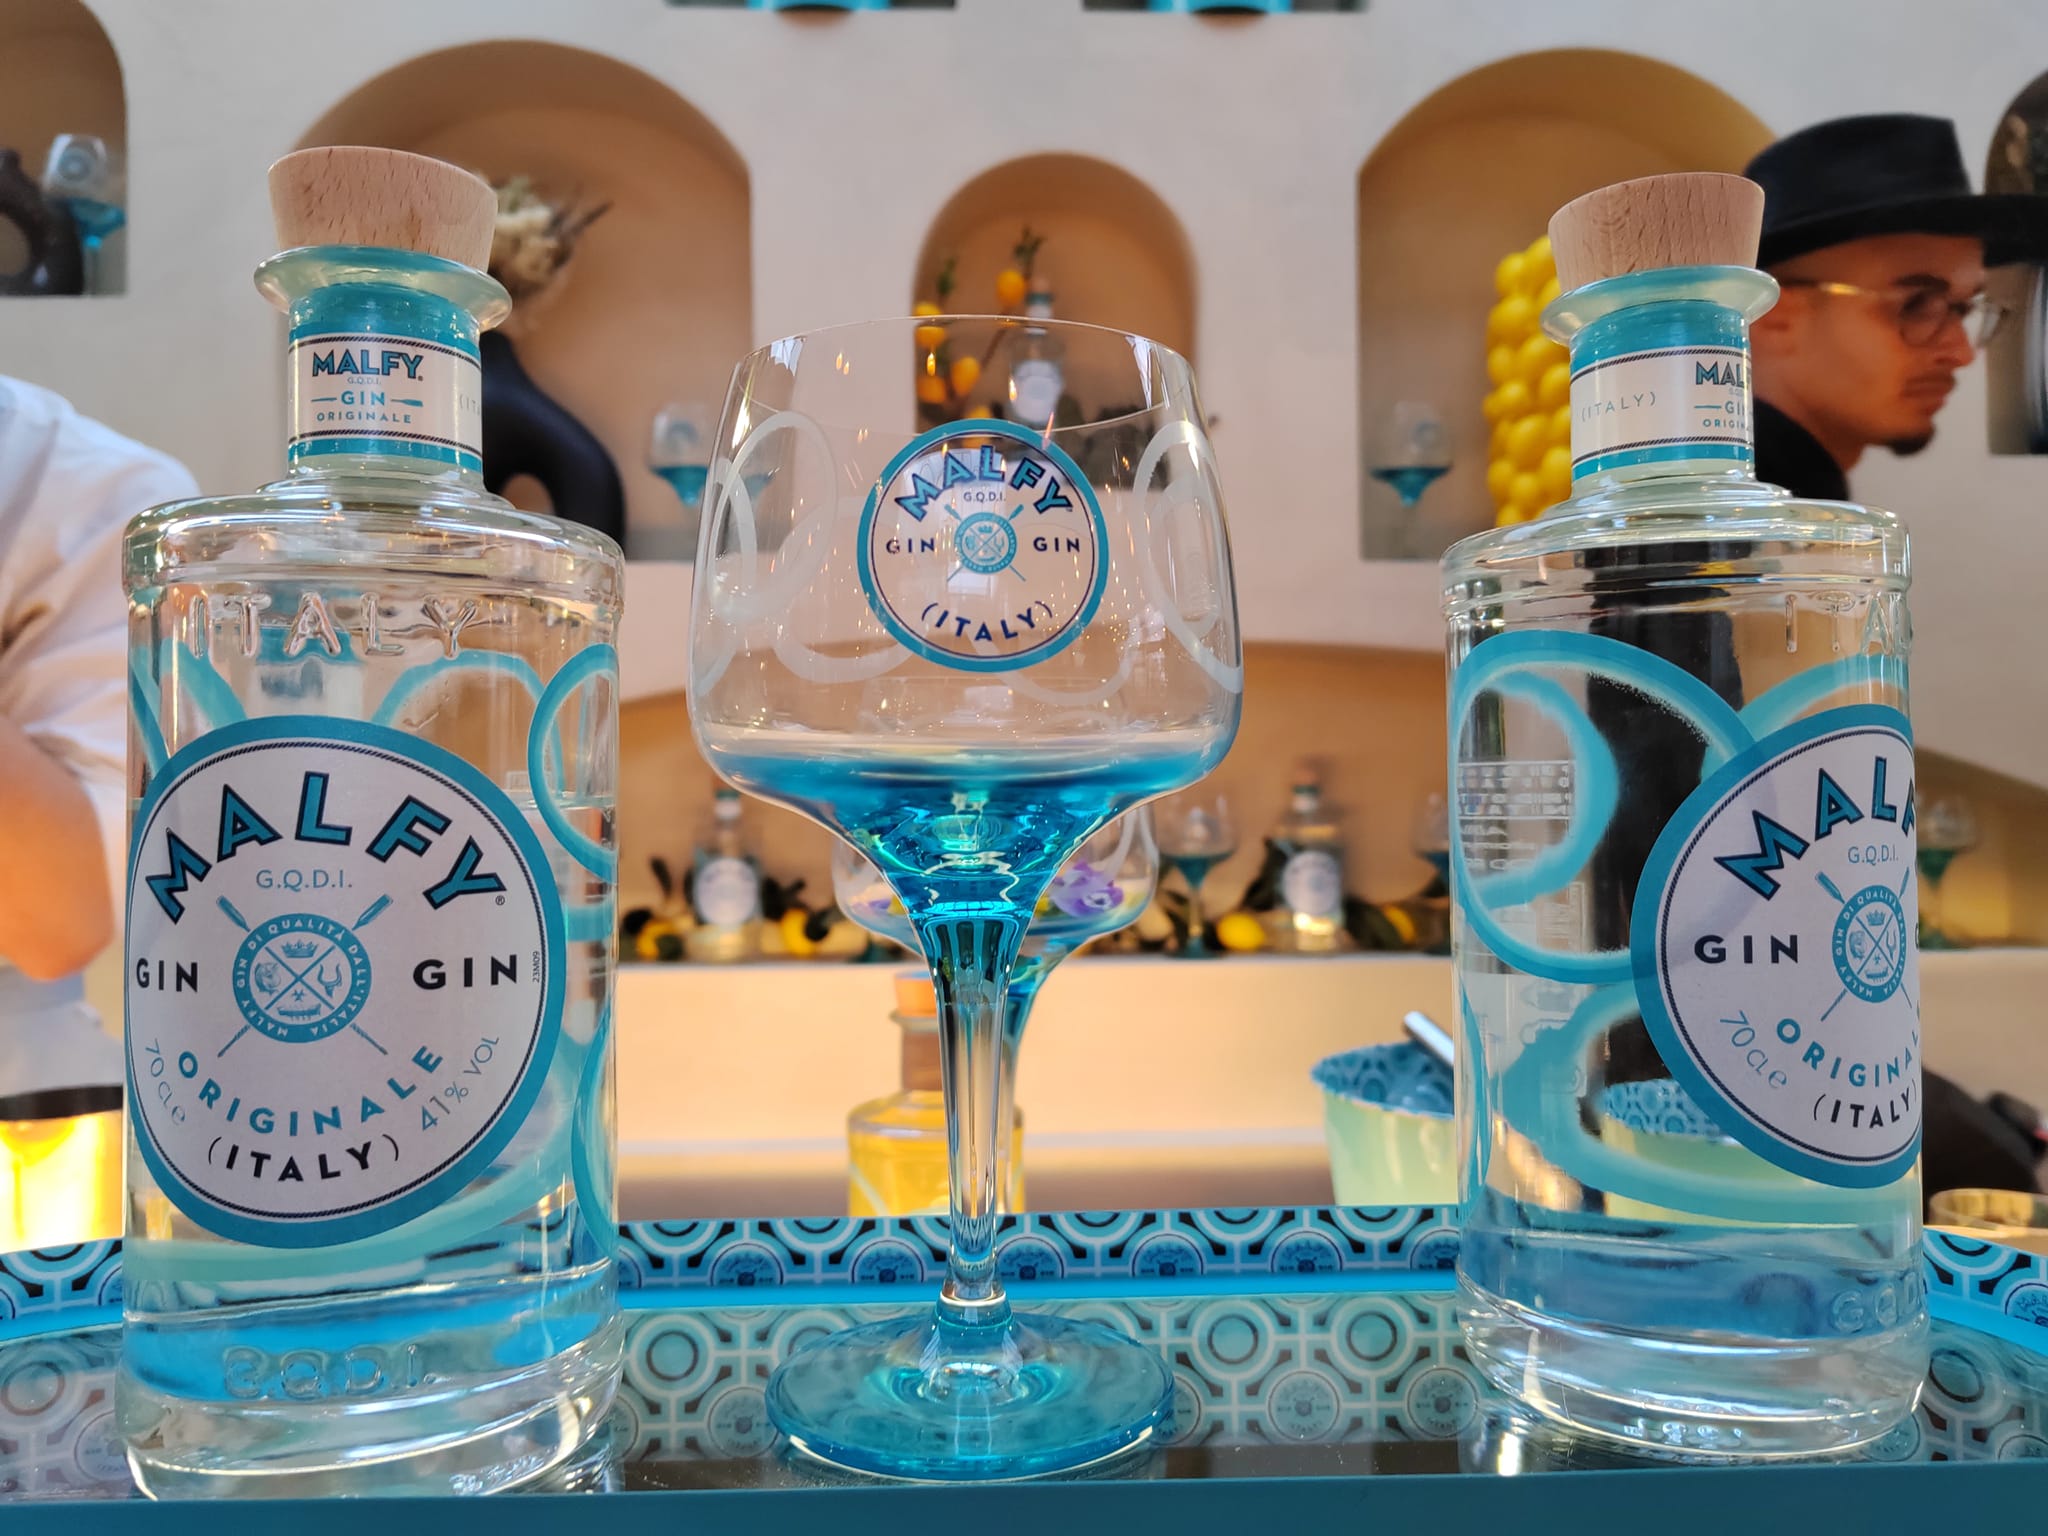 Gin Malfy originale - Pernod Ricard France